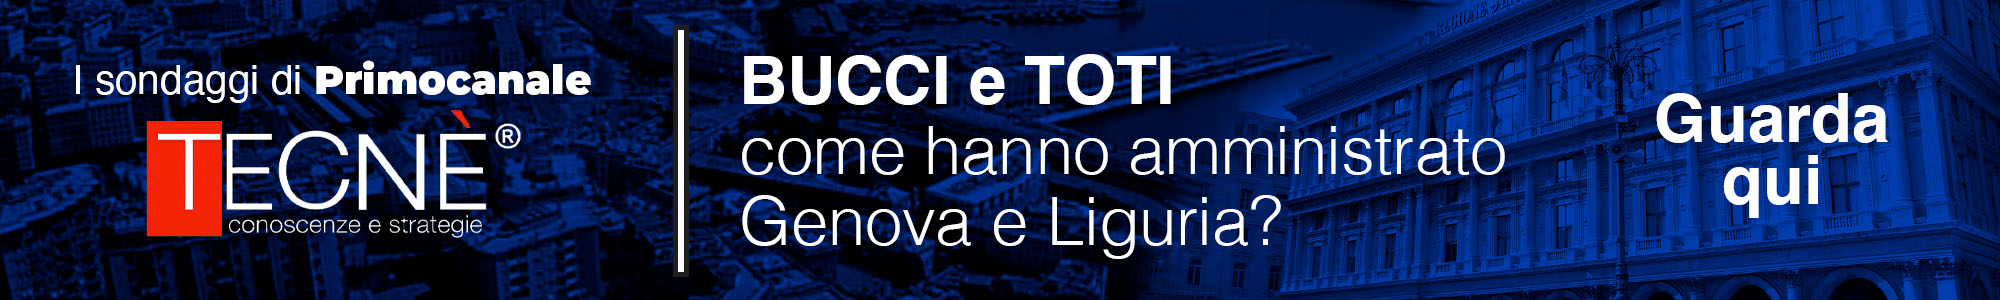 Banner Tecnè - Promo Bucci e Toti